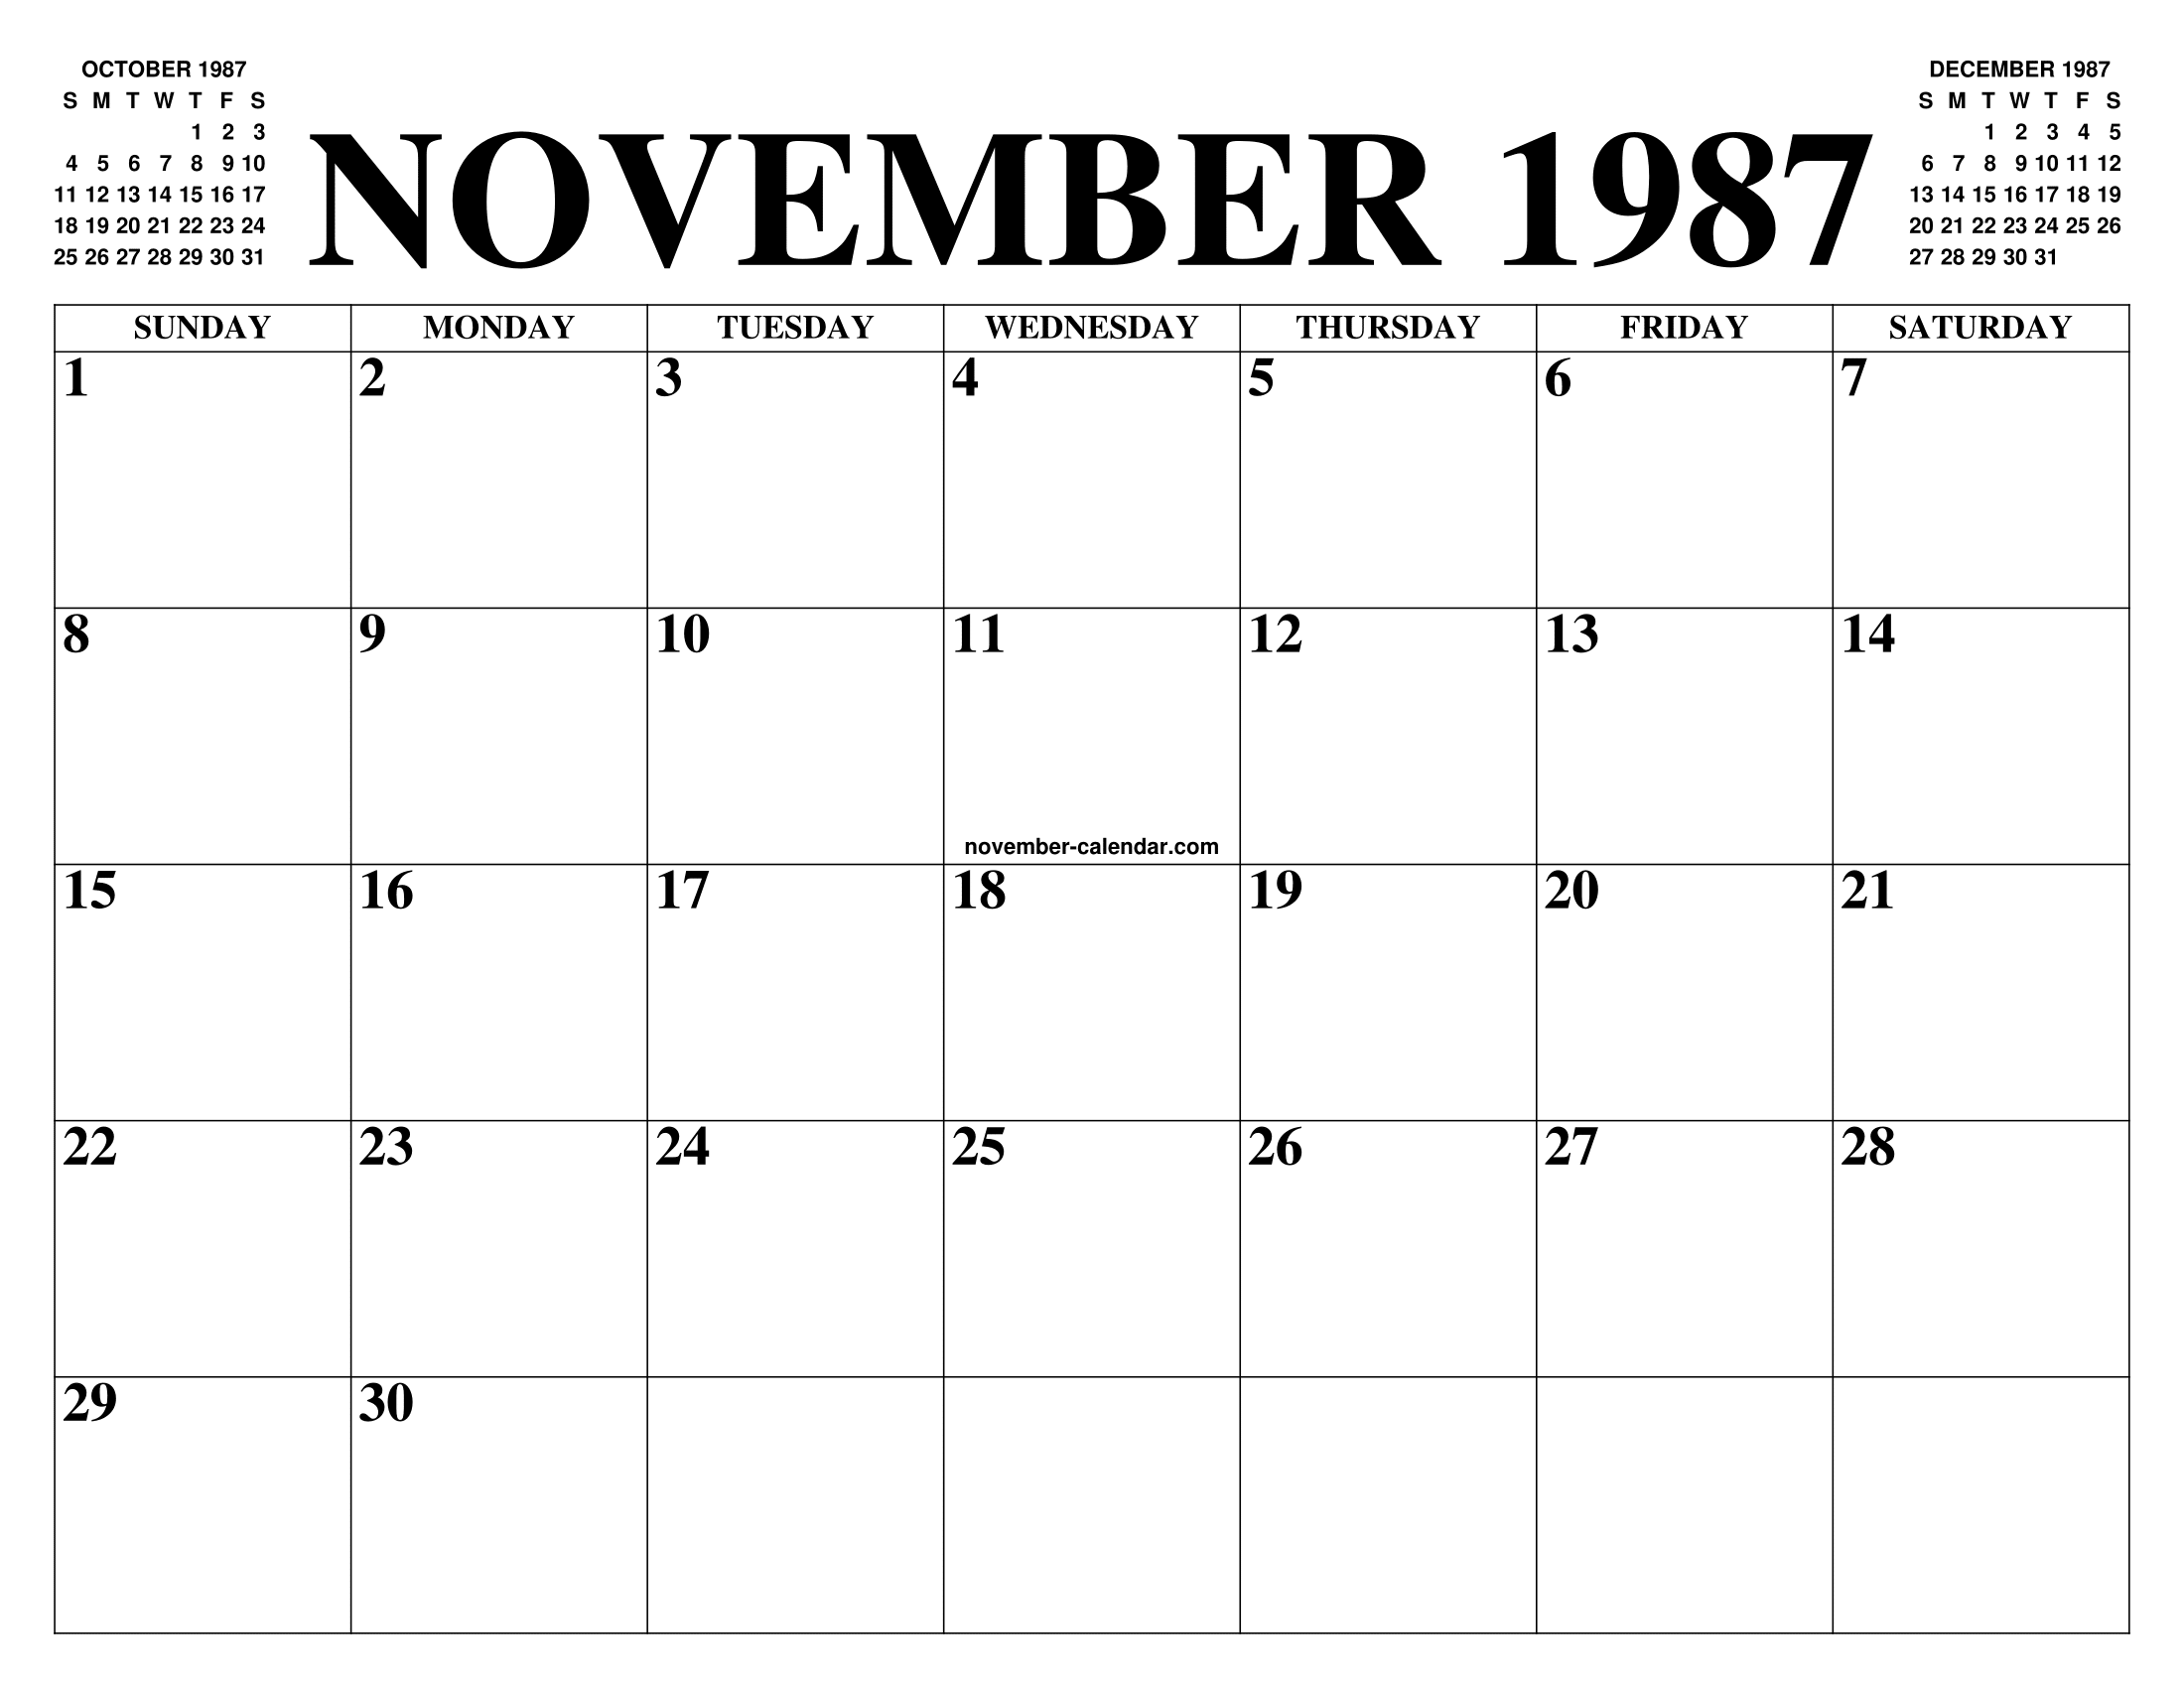 NOVEMBER 1987 CALENDAR OF THE MONTH: FREE PRINTABLE NOVEMBER CALENDAR